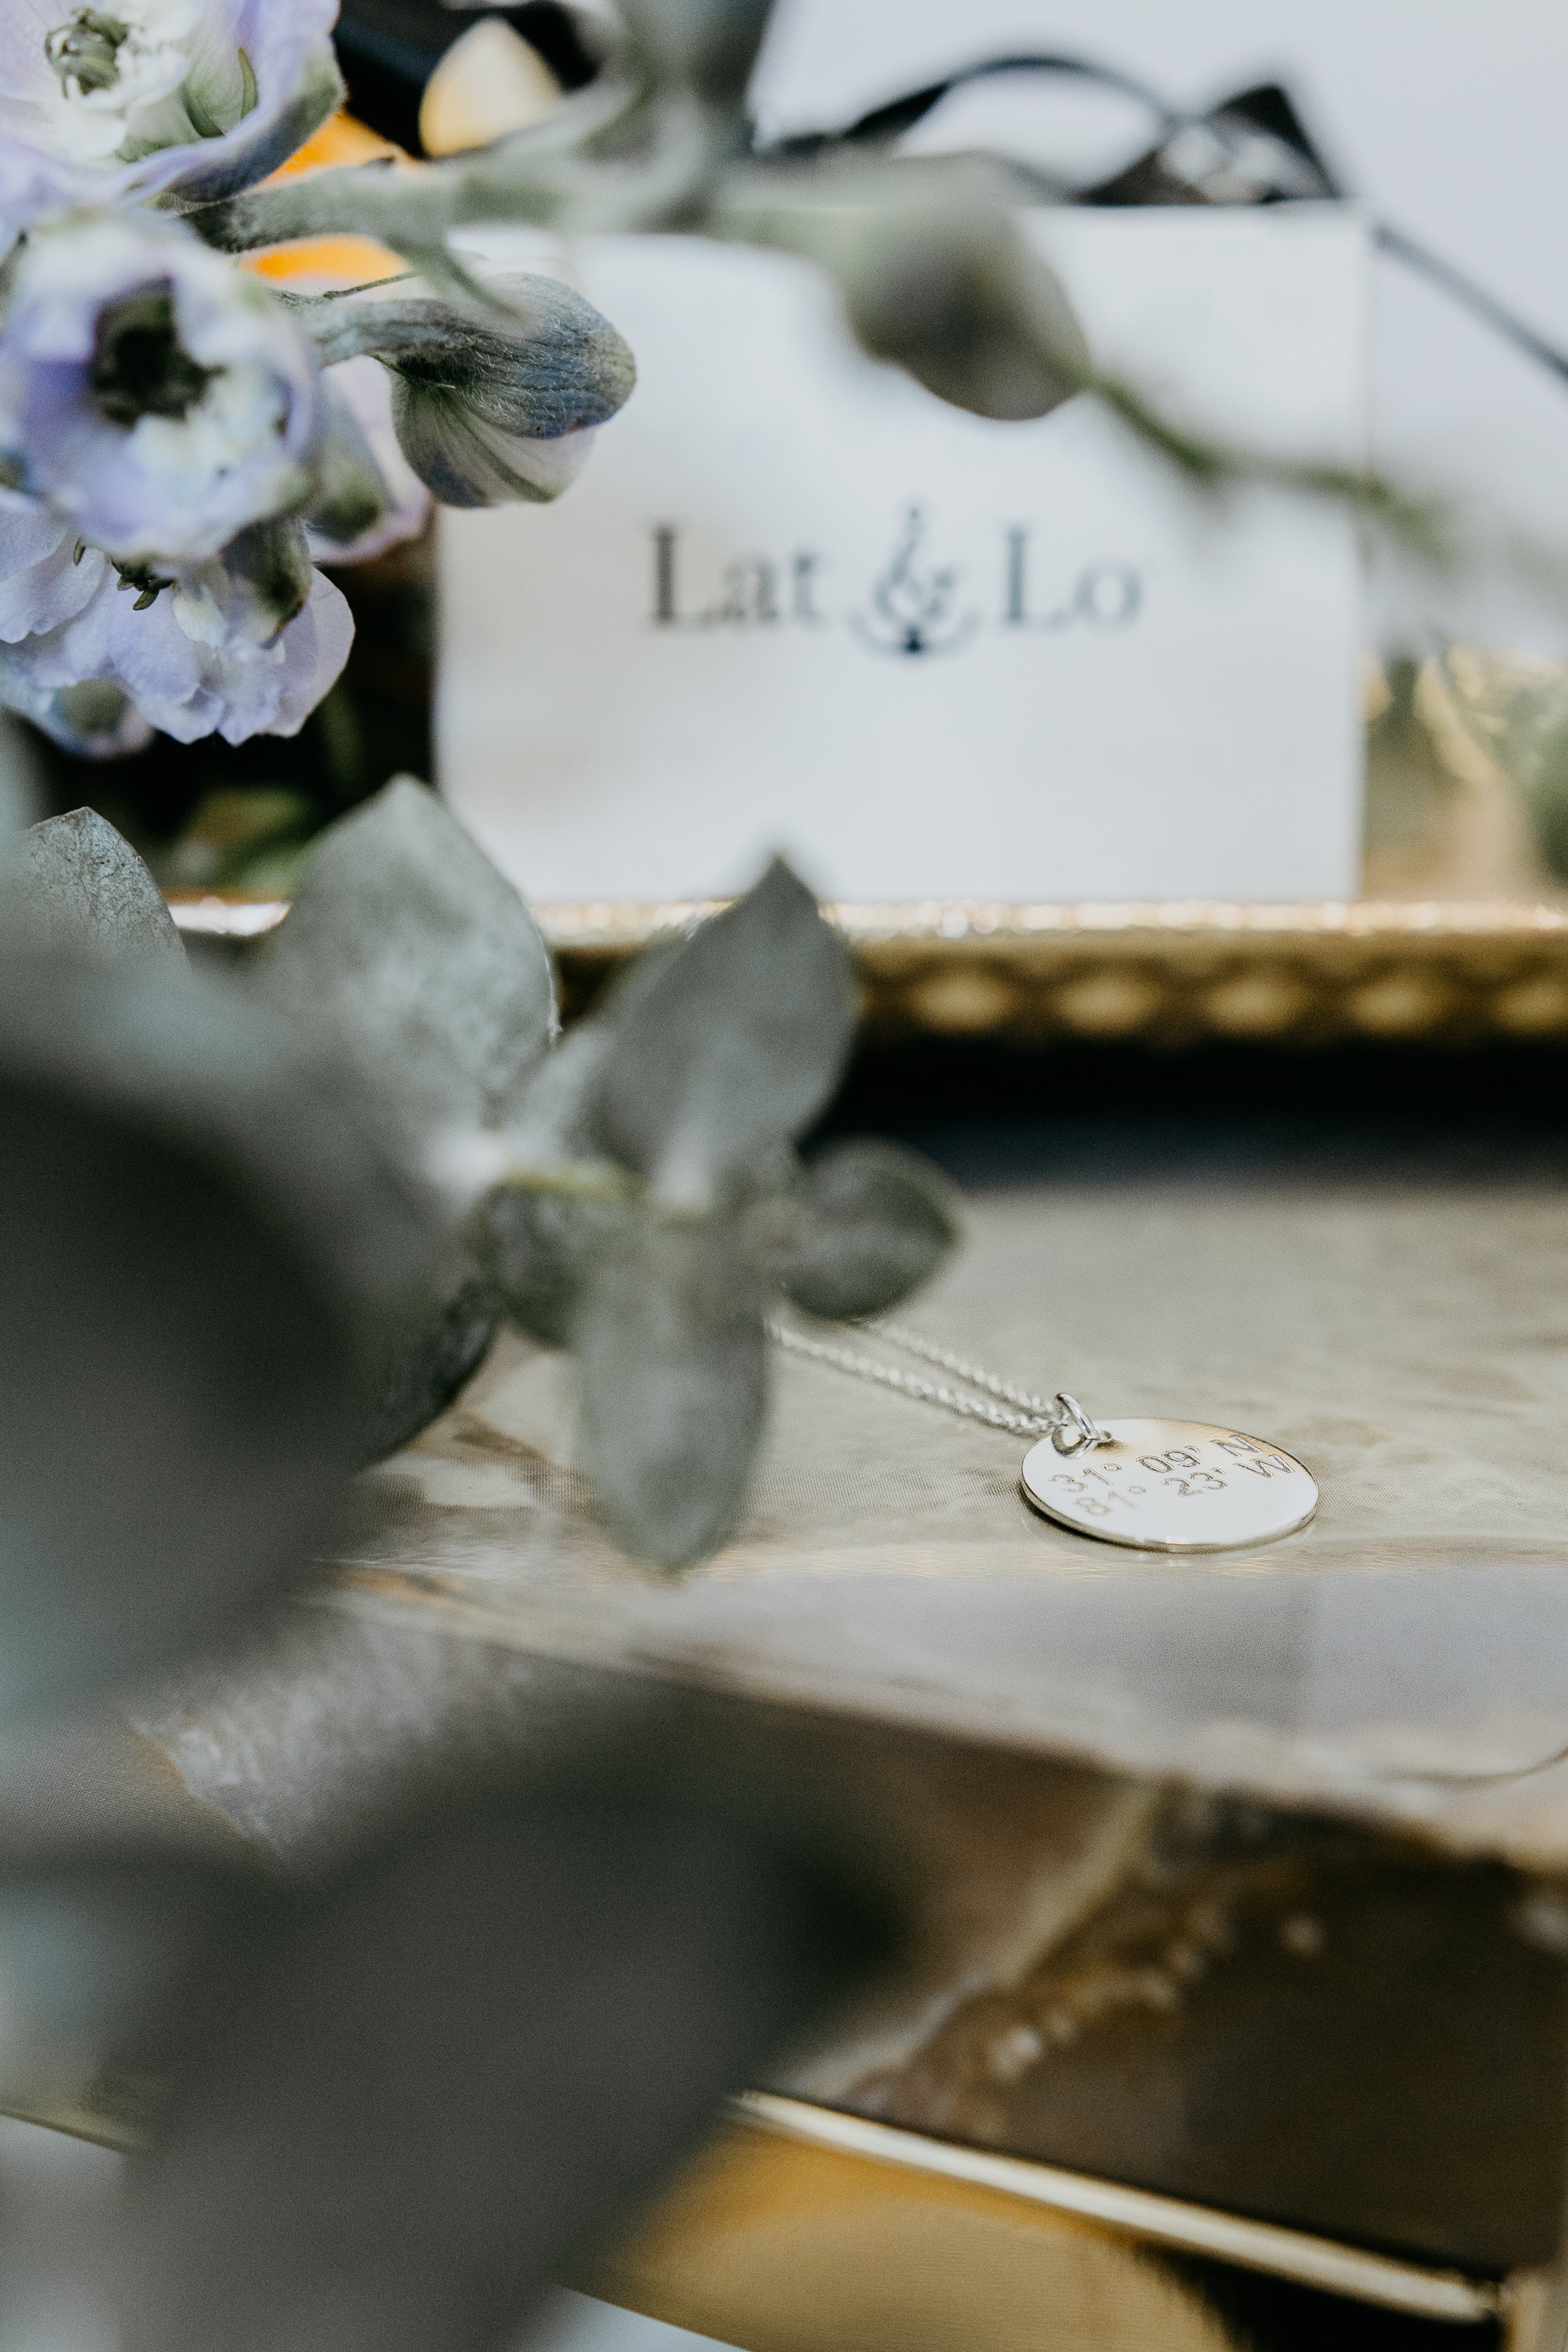 anniversary gift idea-coordinates jewelry-Lat & Lo